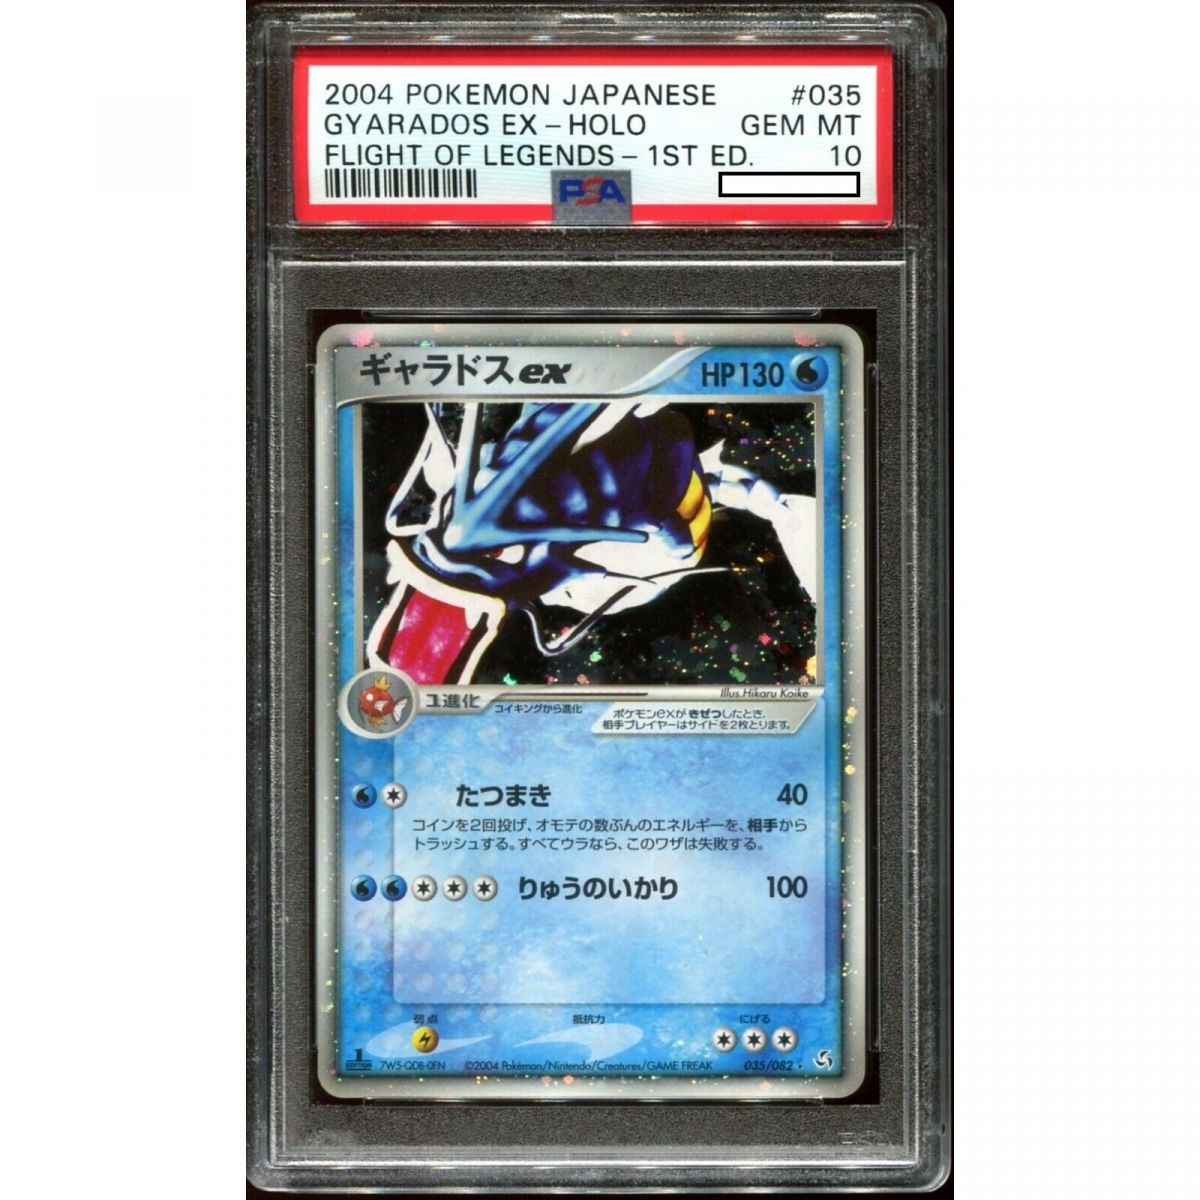 Item Pokémon – Graded Card – Gyarados Ex Flight Of Legends Japanisch 2004 1. Auflage [PSA 10 – Gem Mint]